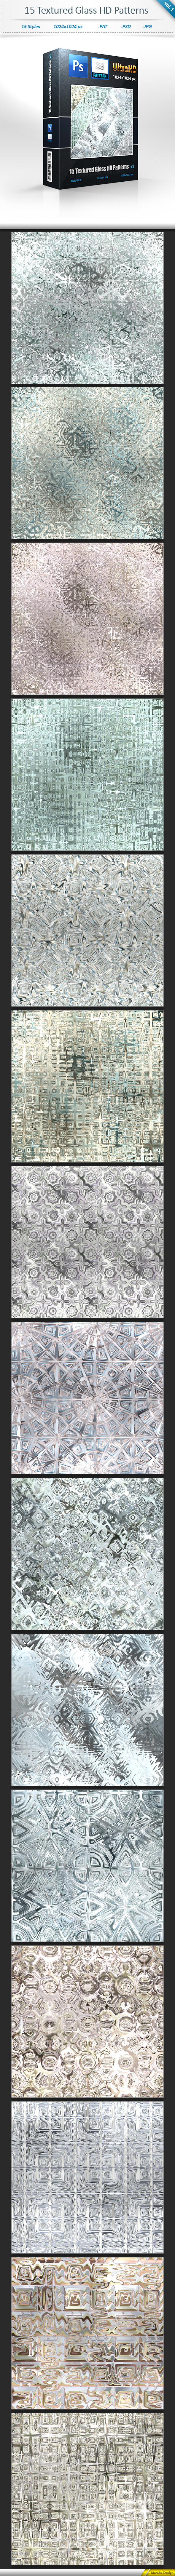 Textured Glass Tileable HD Patterns (vol 1)